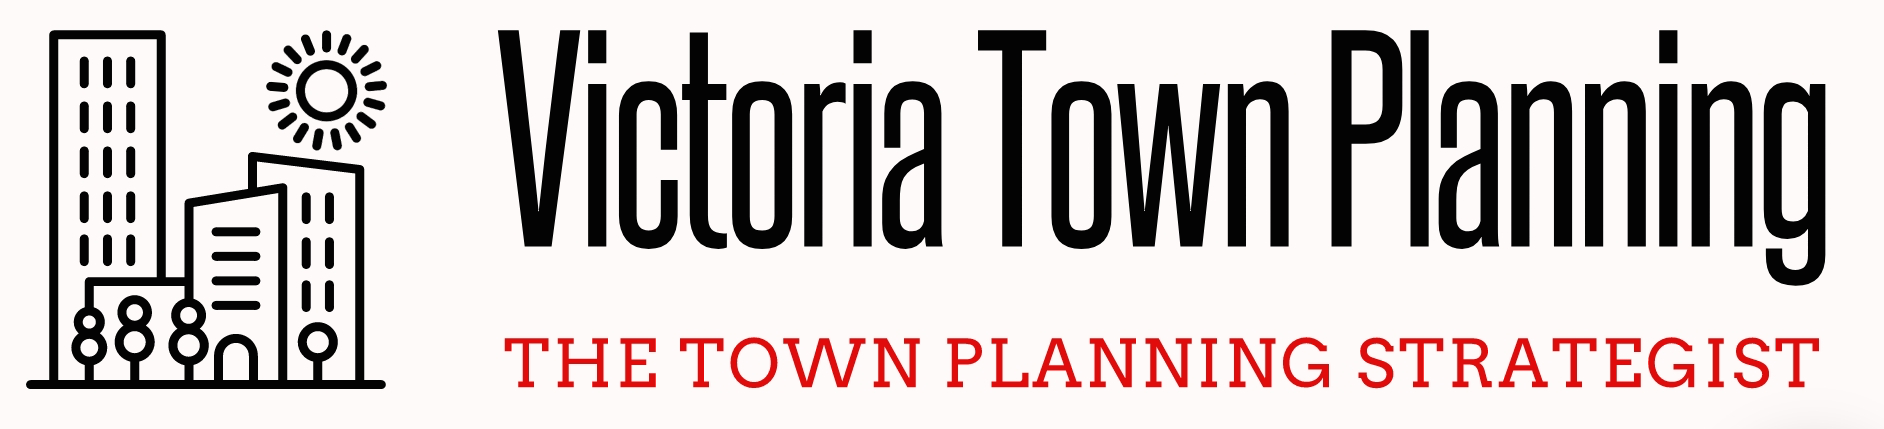 Victoria Town Planning